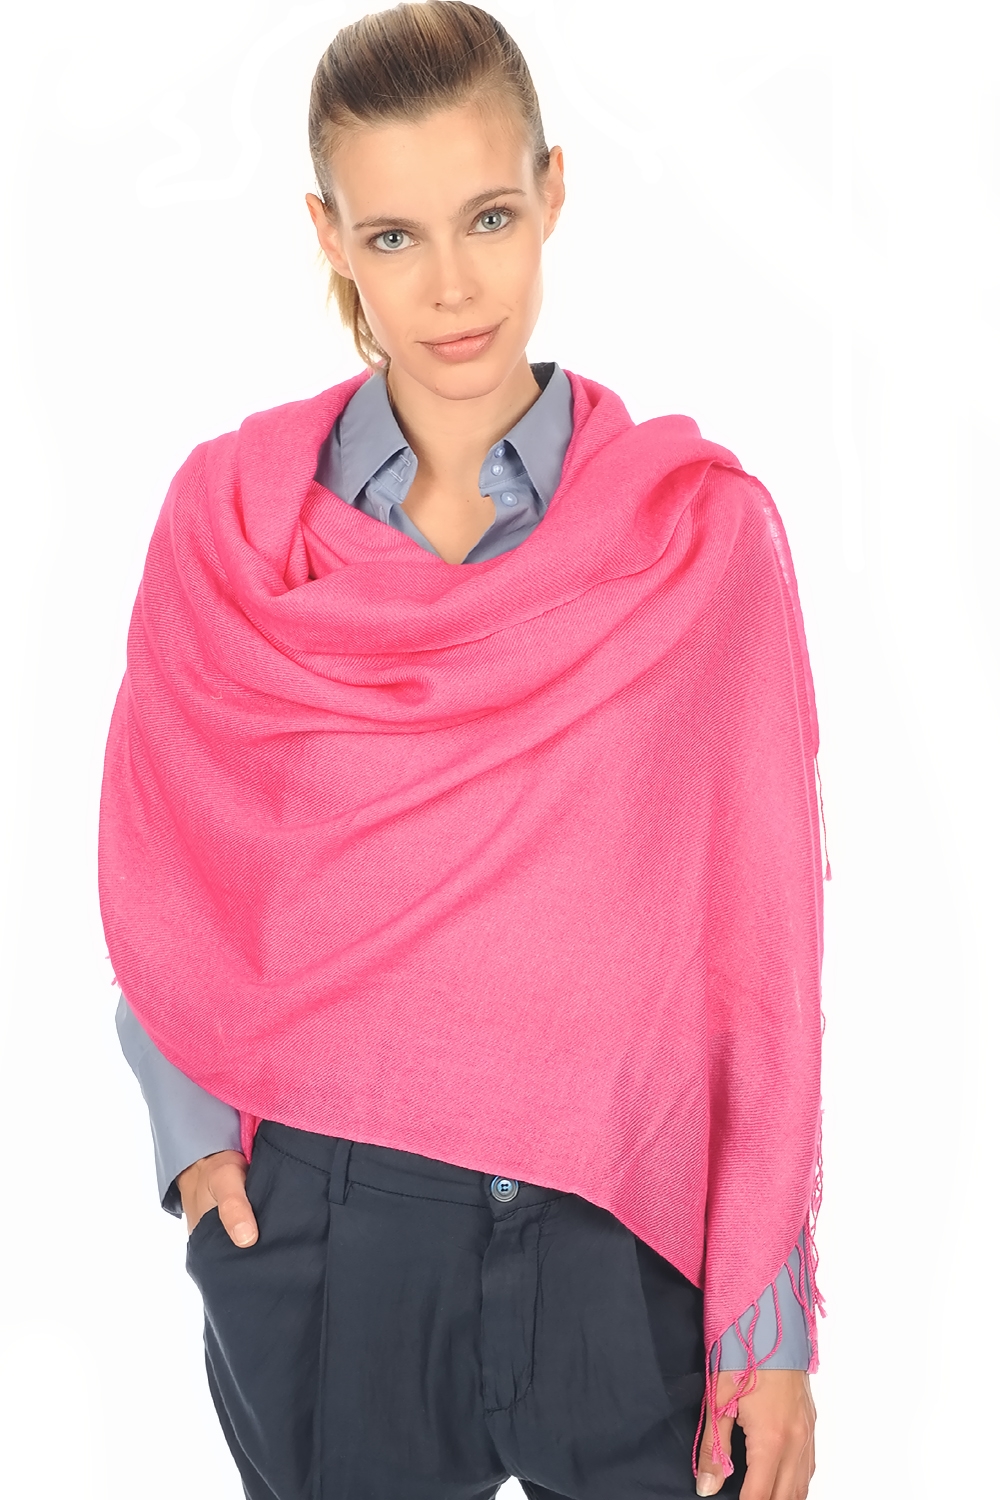 Cashmere ladies shawls diamant shocking pink 204 cm x 92 cm